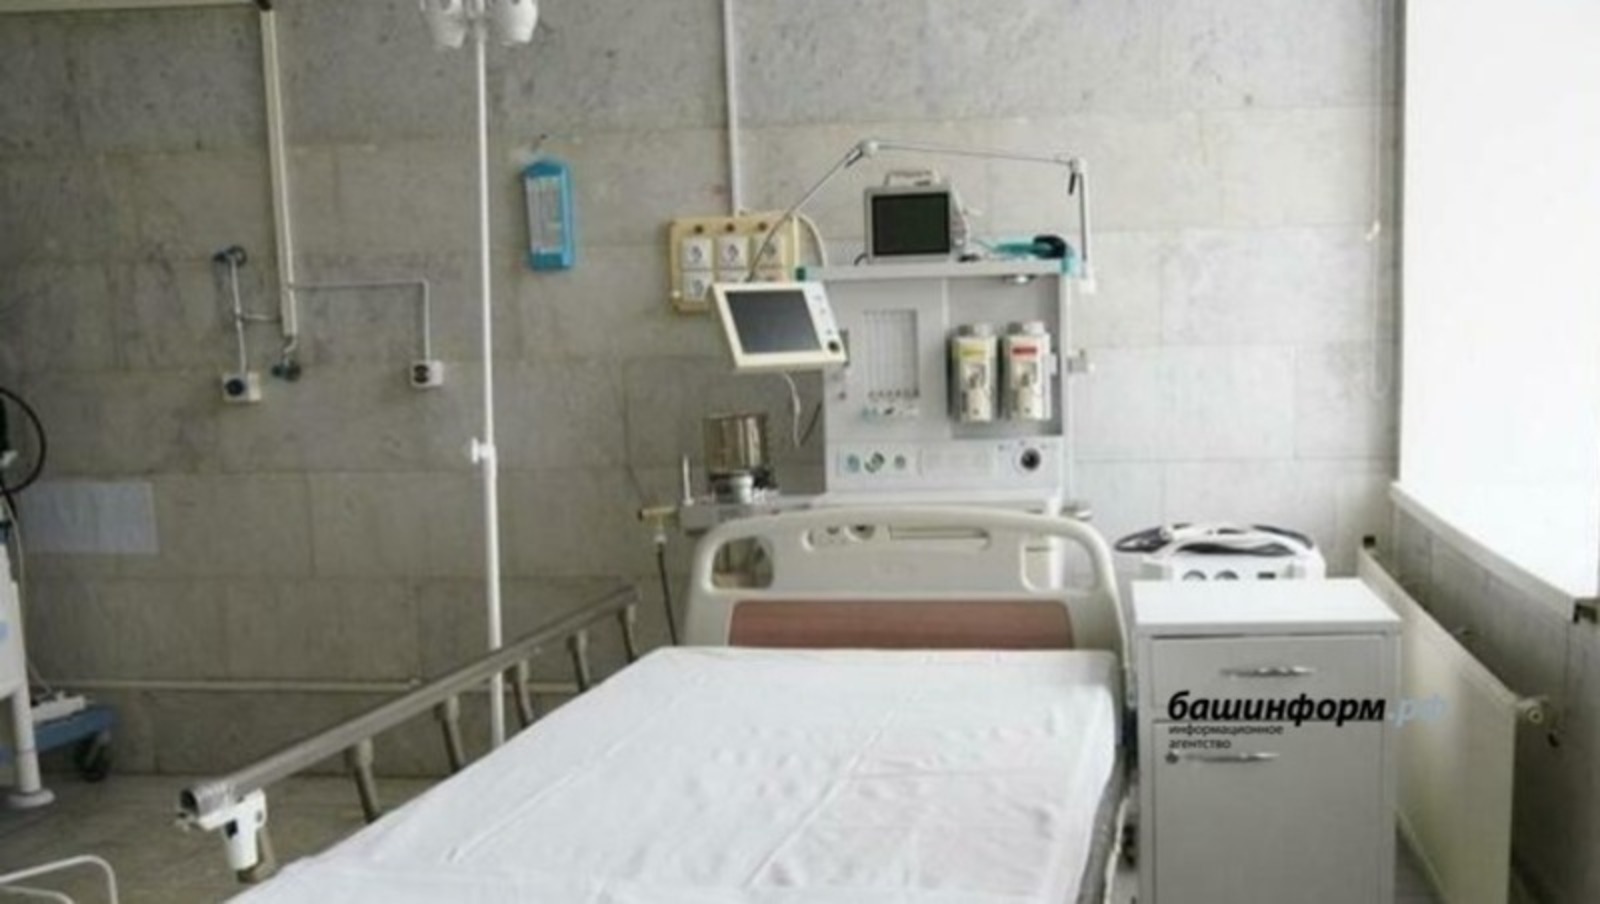 Башкортстанда COVID-19 белән авыручылар һәм госпитализацияләнгән пациентлар саны бик тиз кими